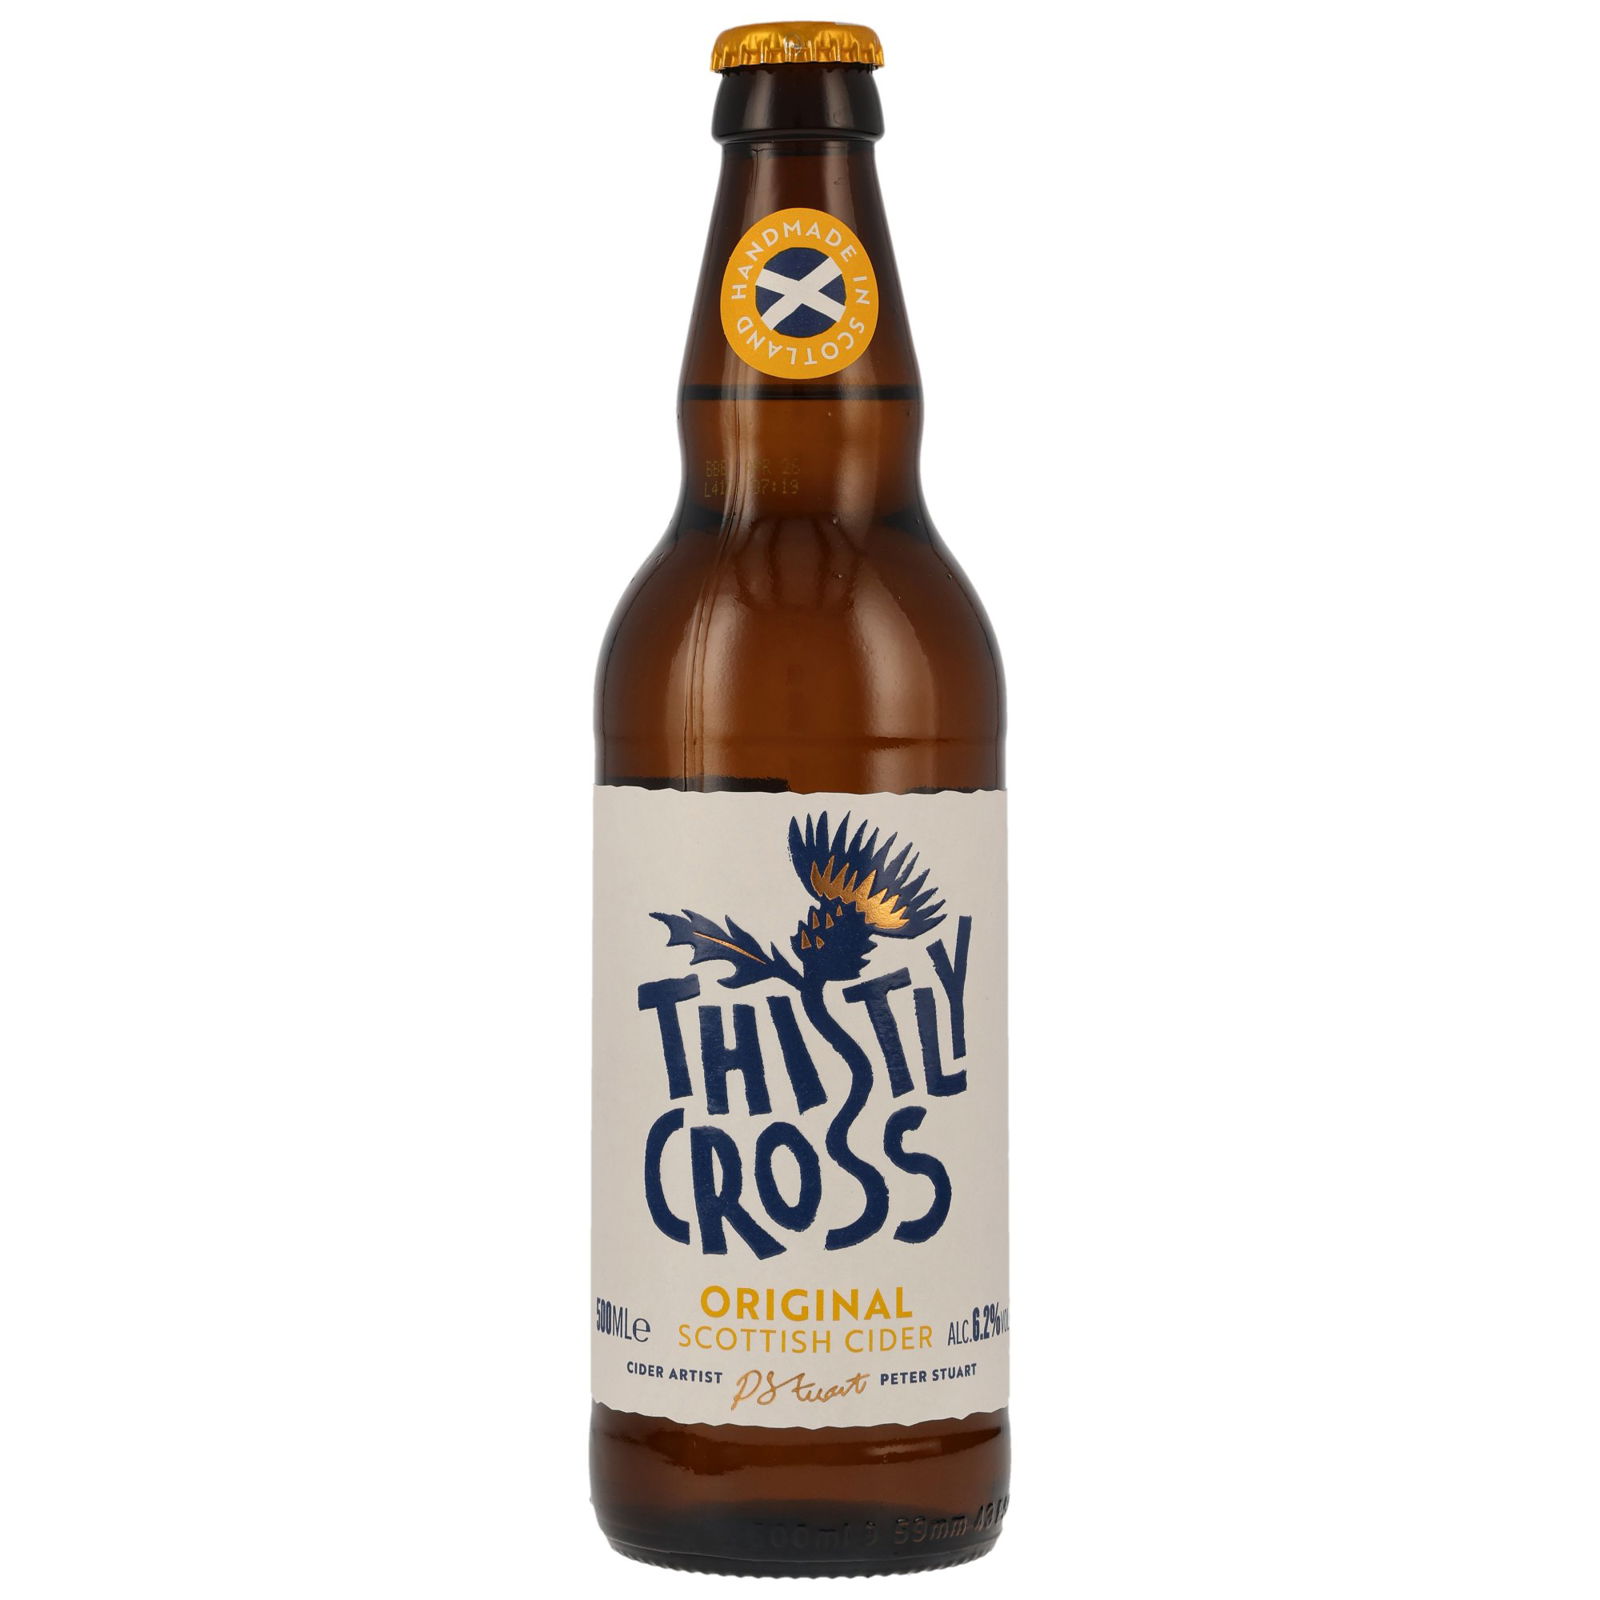 Thistly Cross Original Scottish Cider